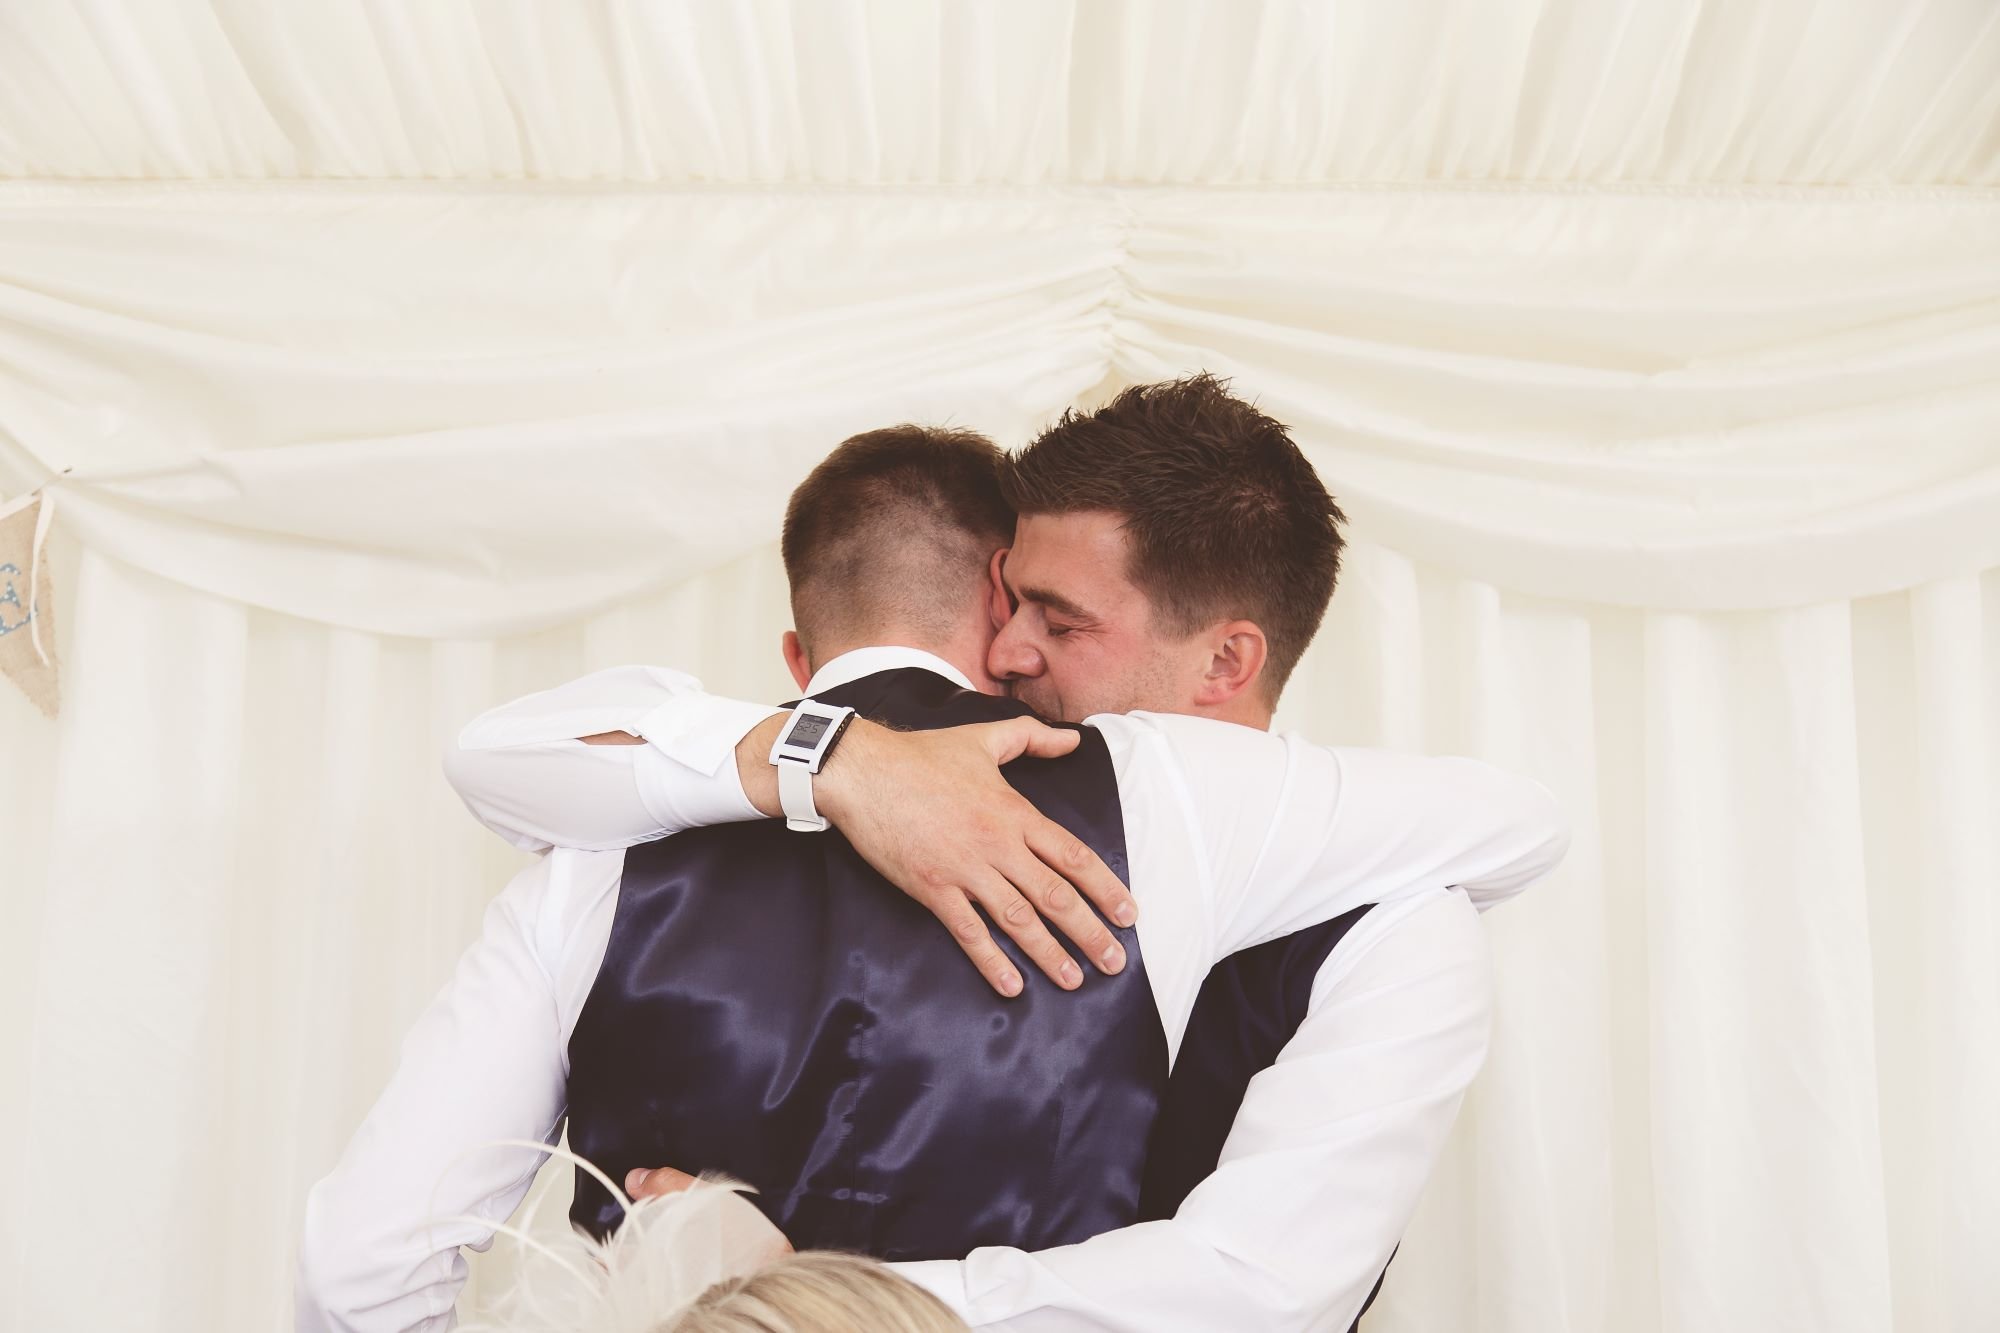 Groom and best man hugging during wedding celebrations